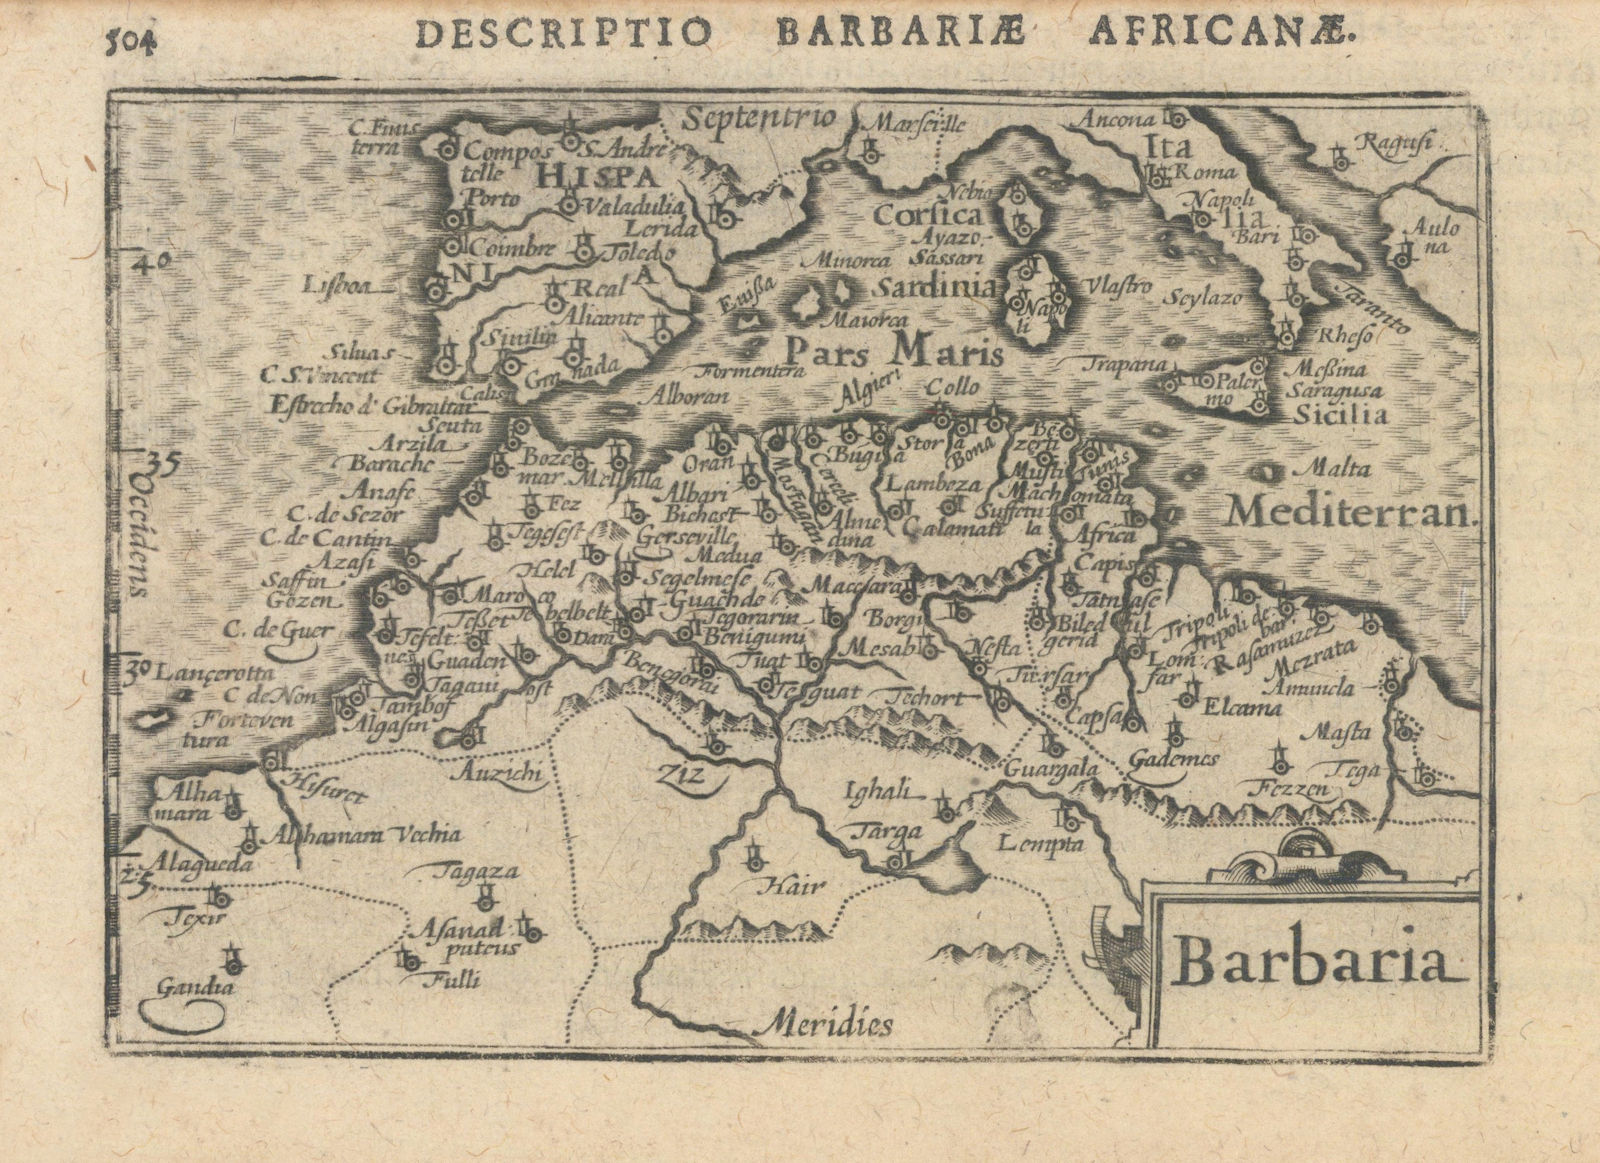 Barbariae Africanae / Barbaria by Bertius/ Langenes. North Africa Spain 1603 map